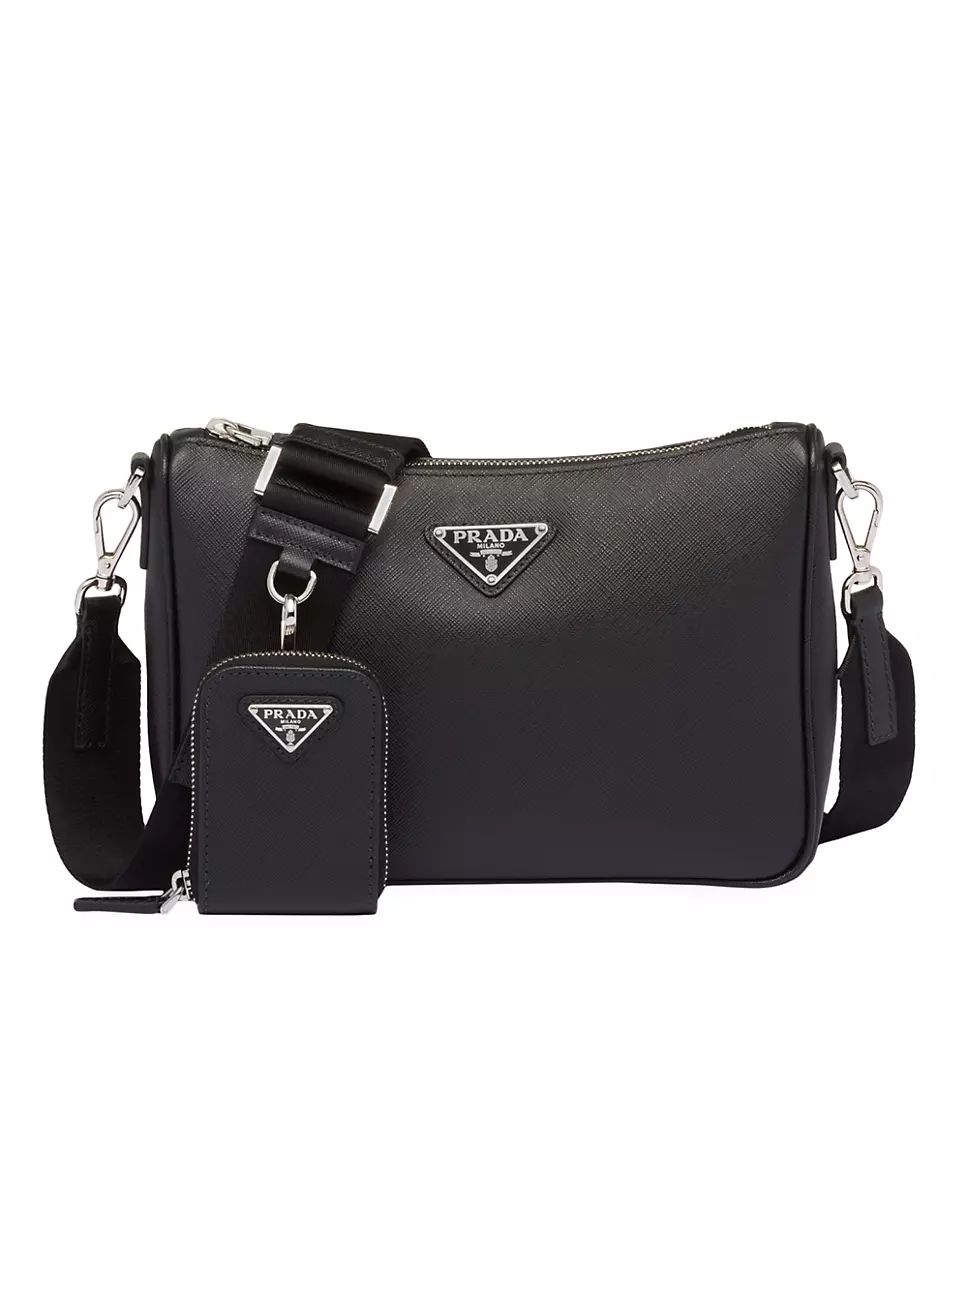 Prada Saffiano-Leather Shoulder Bag | Saks Fifth Avenue